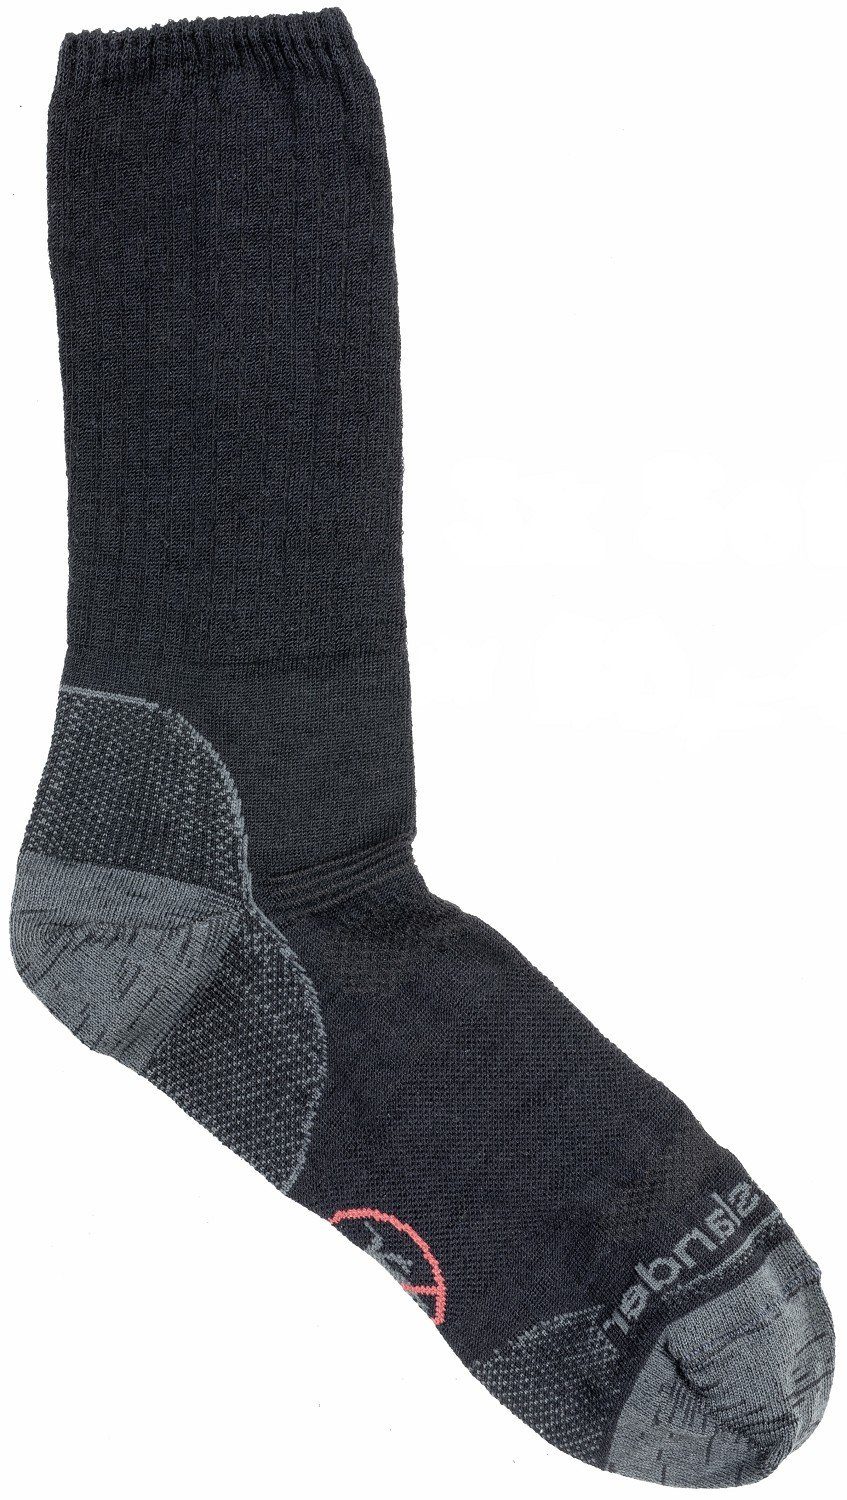 Wandersocken Oefele Zeckenschutz von Zeckensocke mit Crosslander® Merinowolle Anti-Zecken-Socken